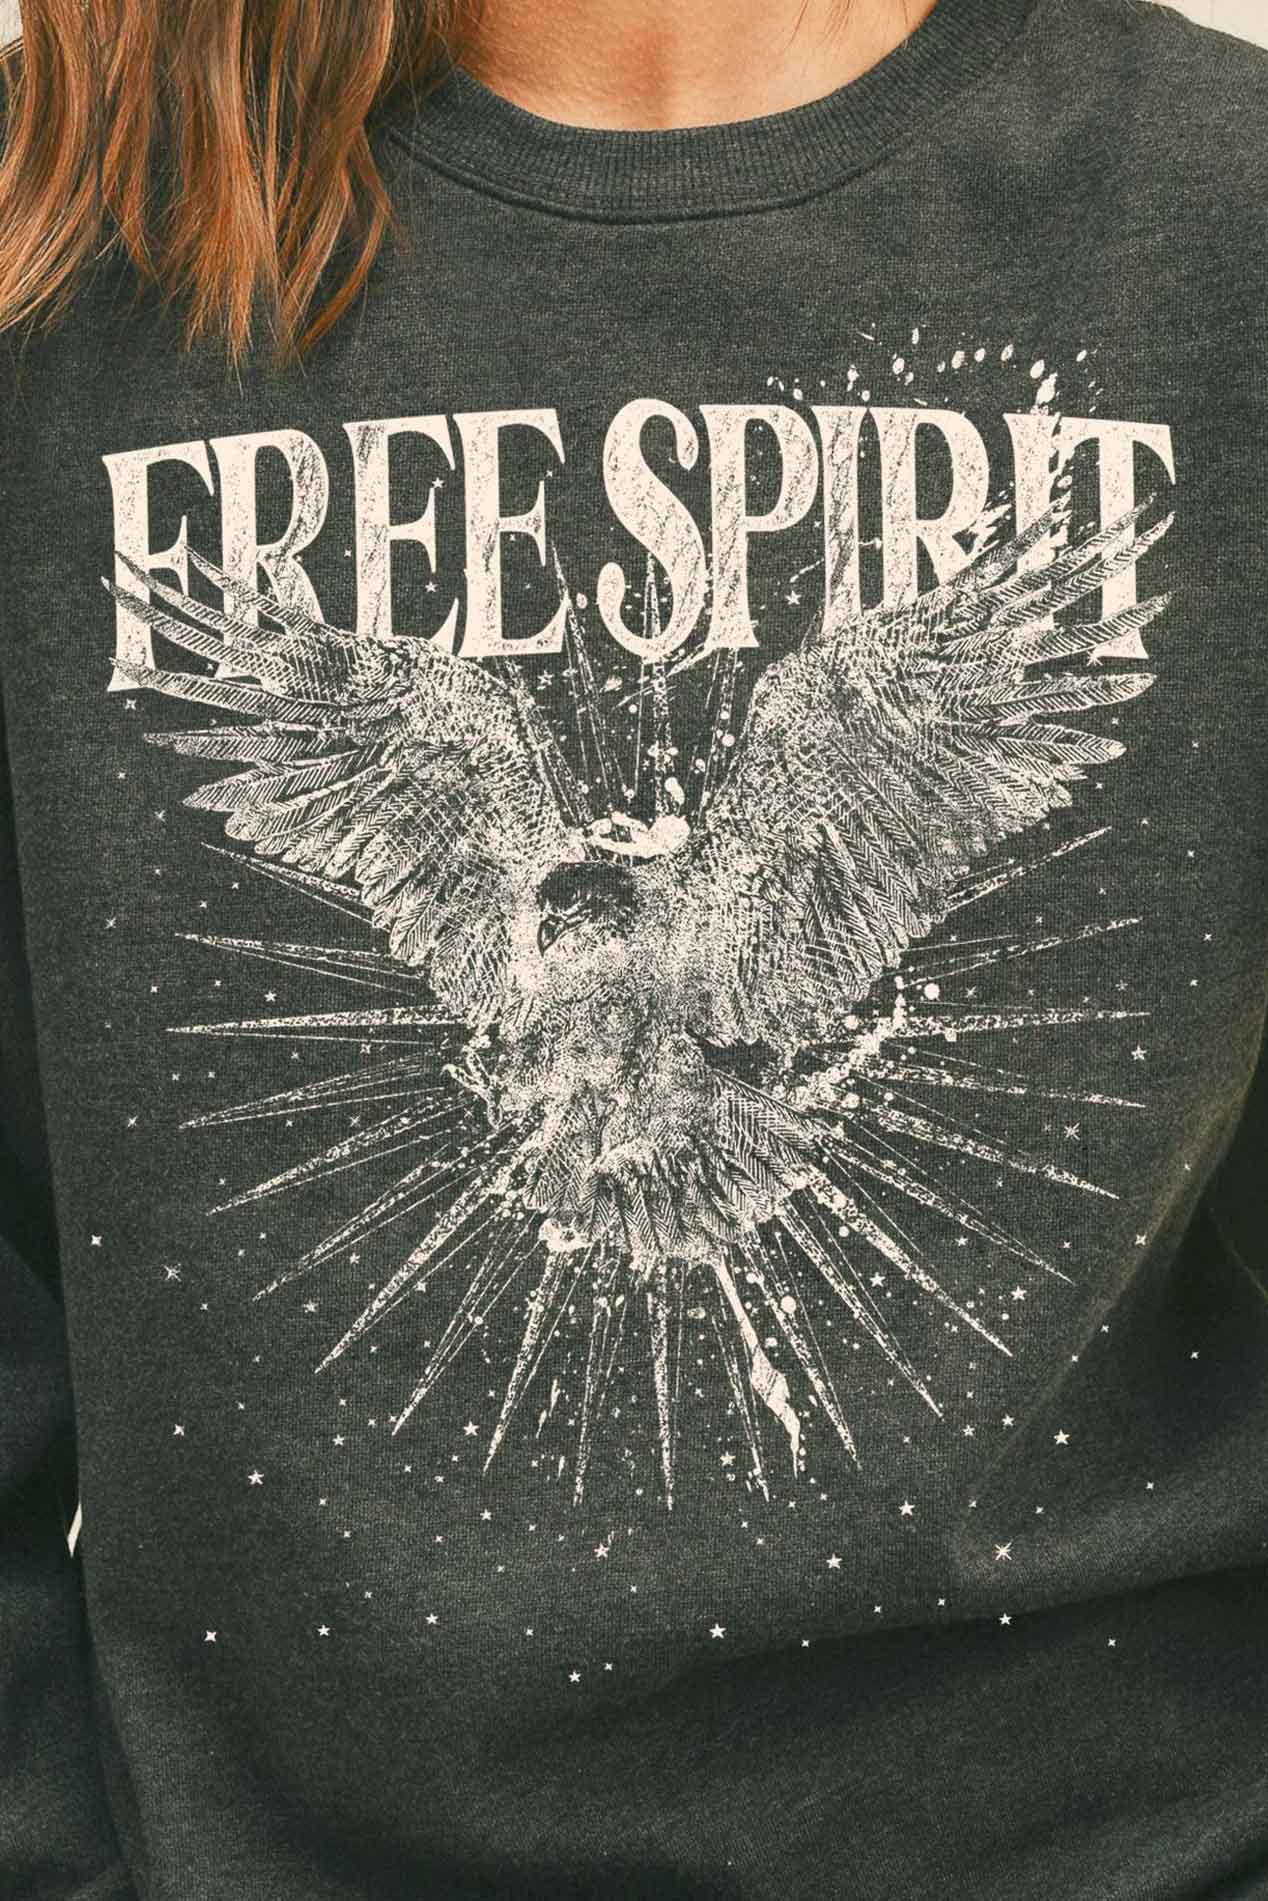 Free Spirit Graphic Cropped Sweatshirt